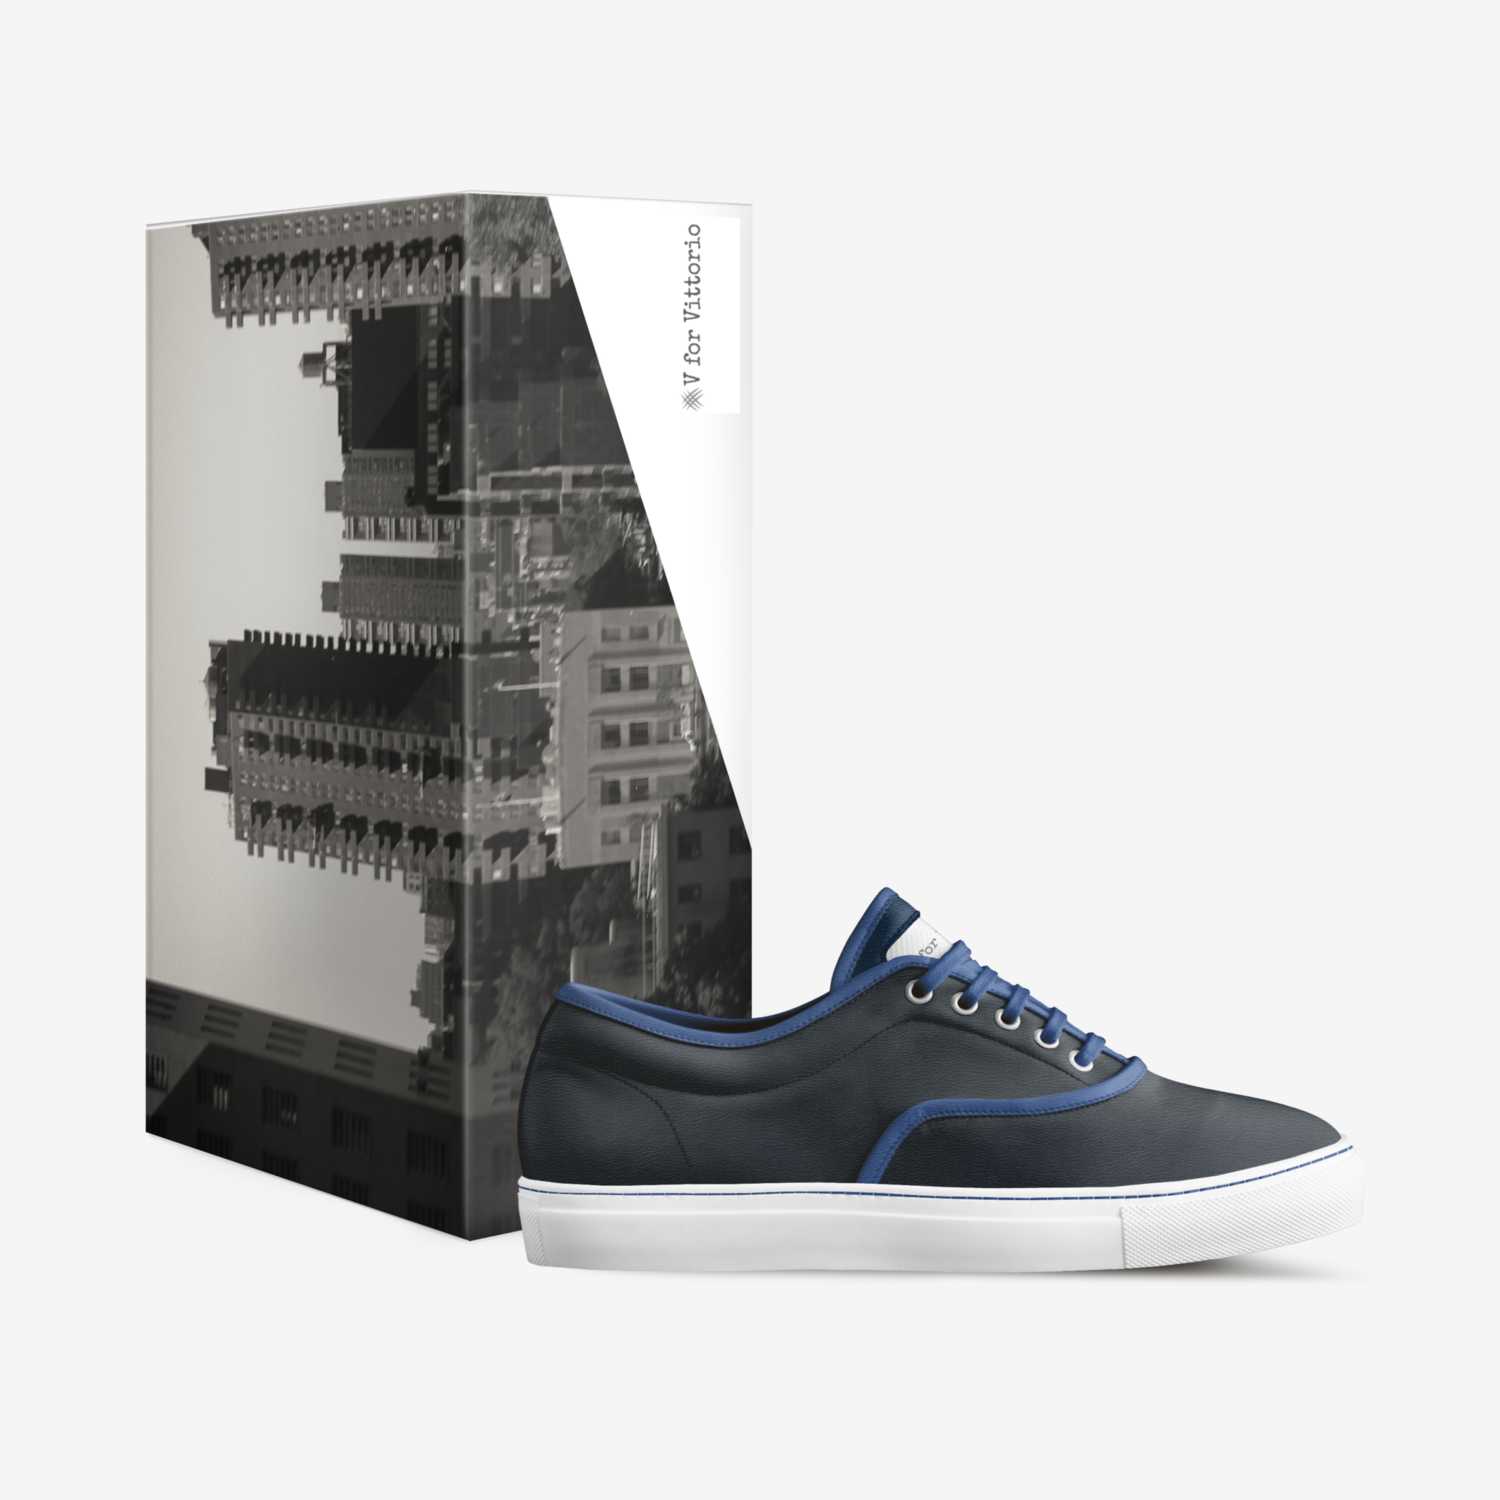 V for Vittorio custom made in Italy shoes by Vittorio De Oro | Box view